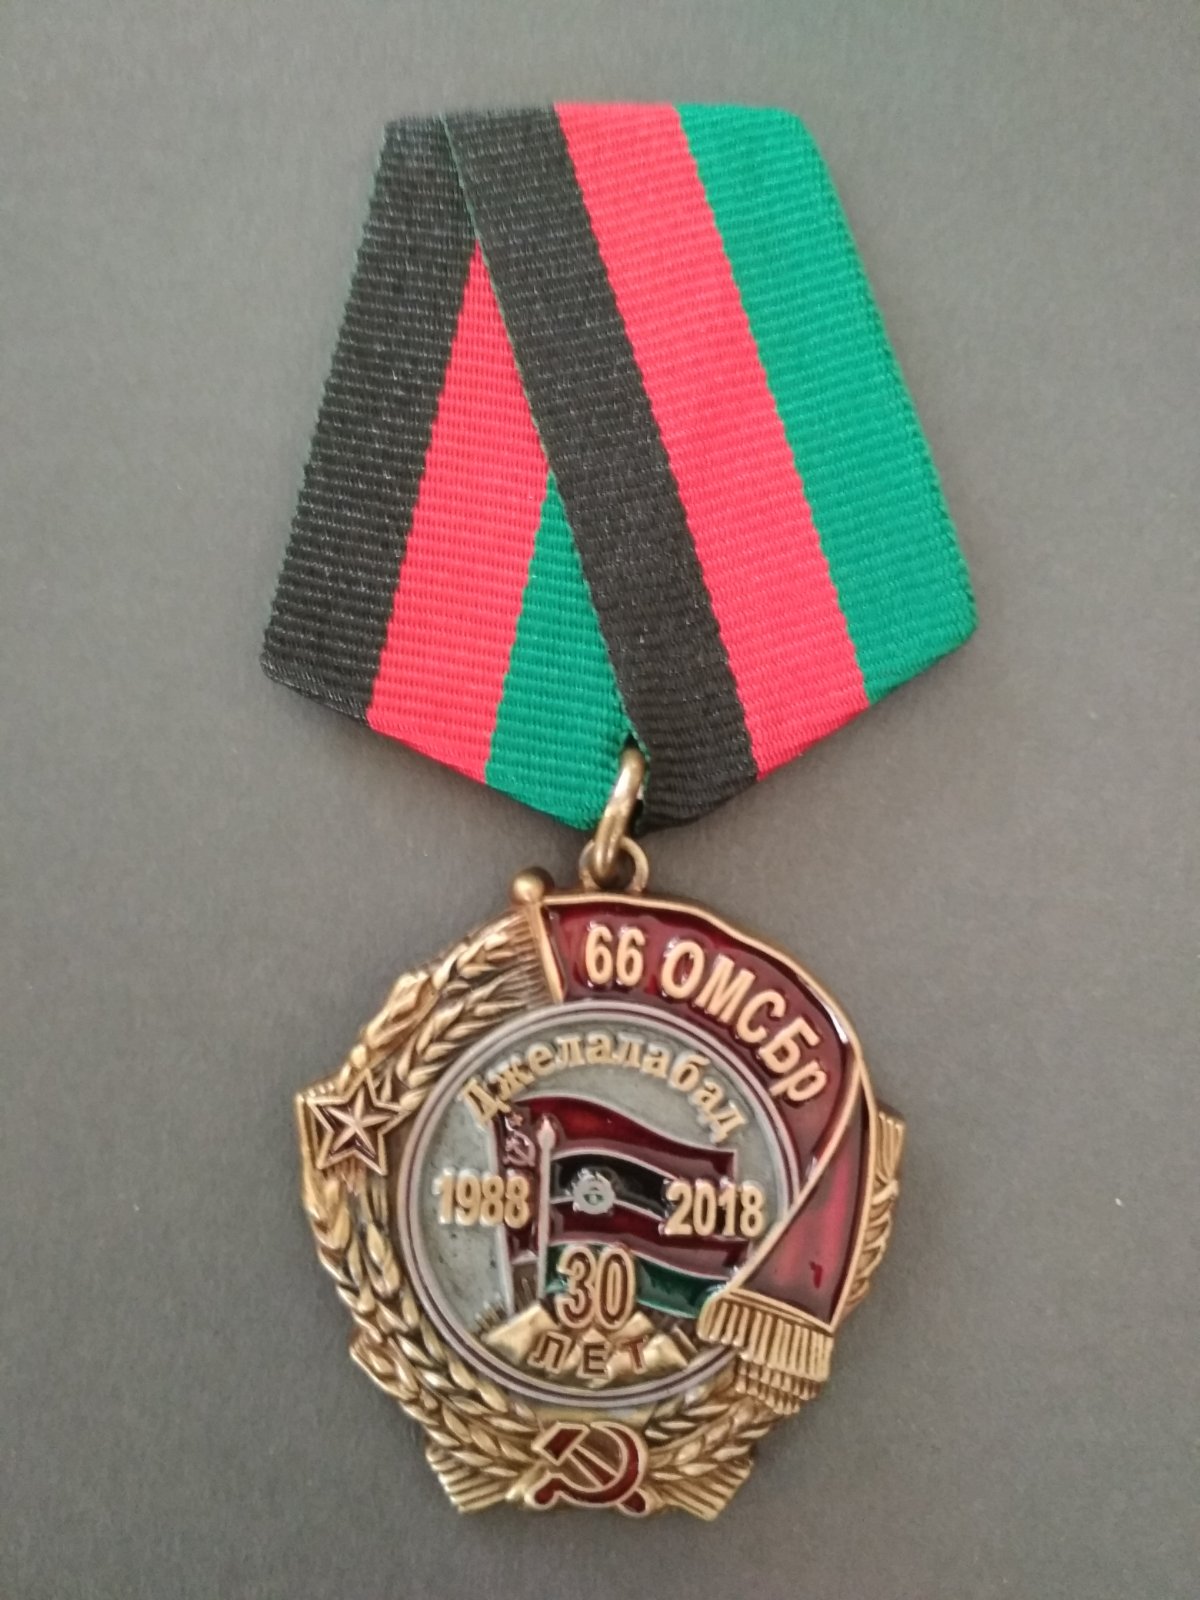 Медаль "30 лет вывода" 66 ОМСБр. Джелалабад.